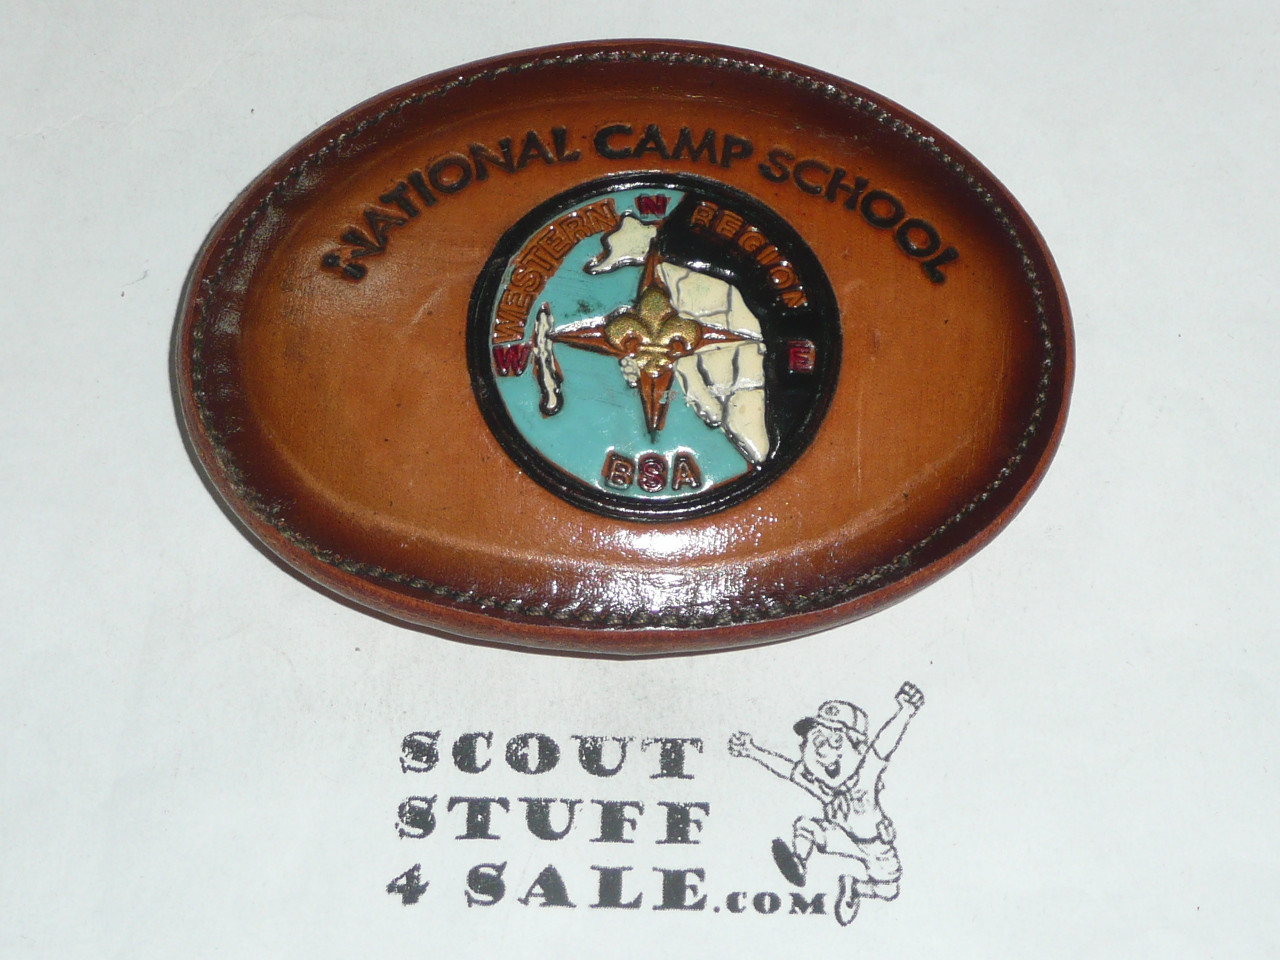 Leather Western Region National Camp School Boy Scout Belt Buckle